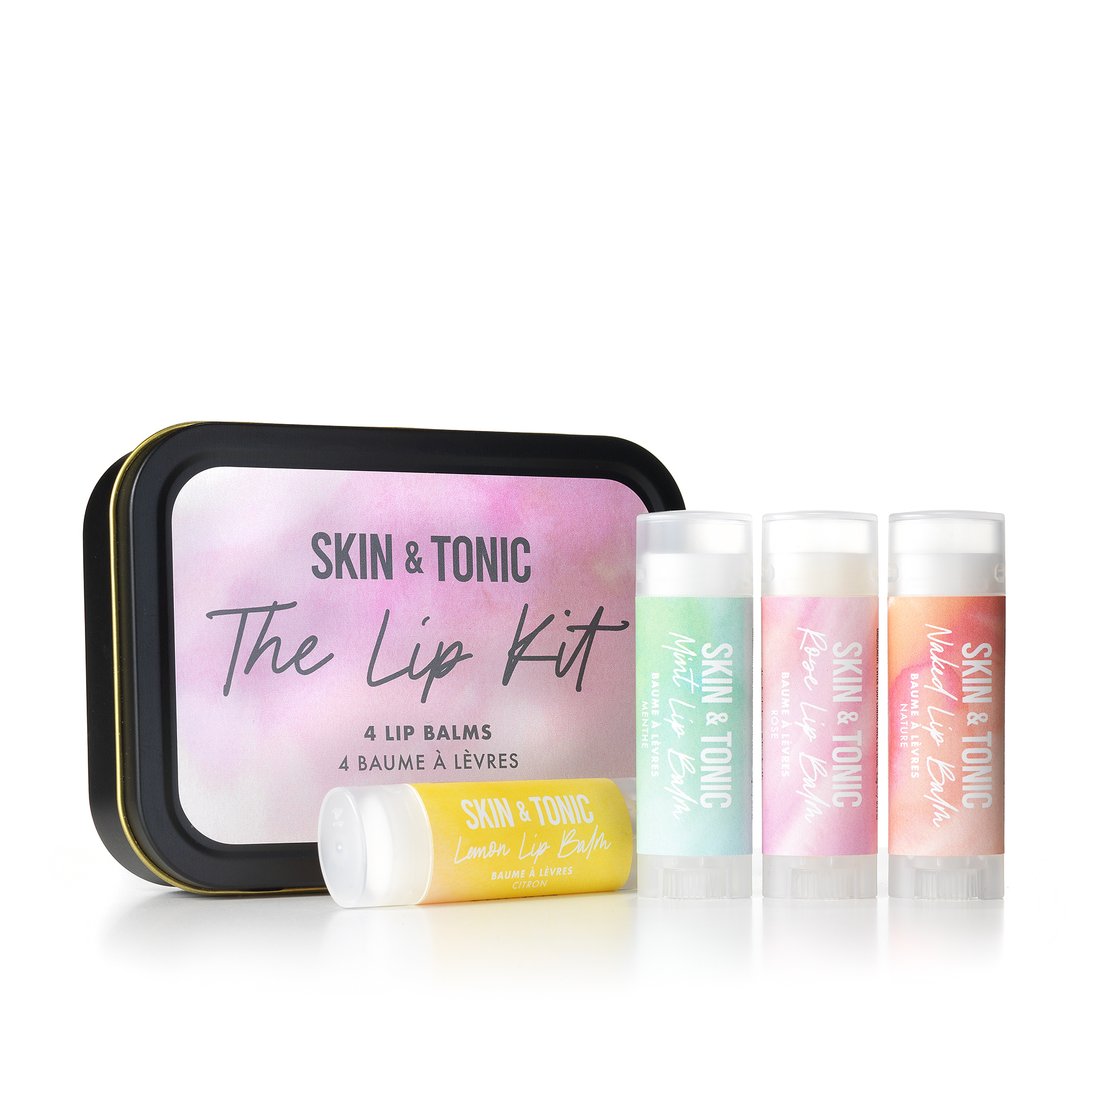 Skin & Tonic huulivoide-lahjapakkaus